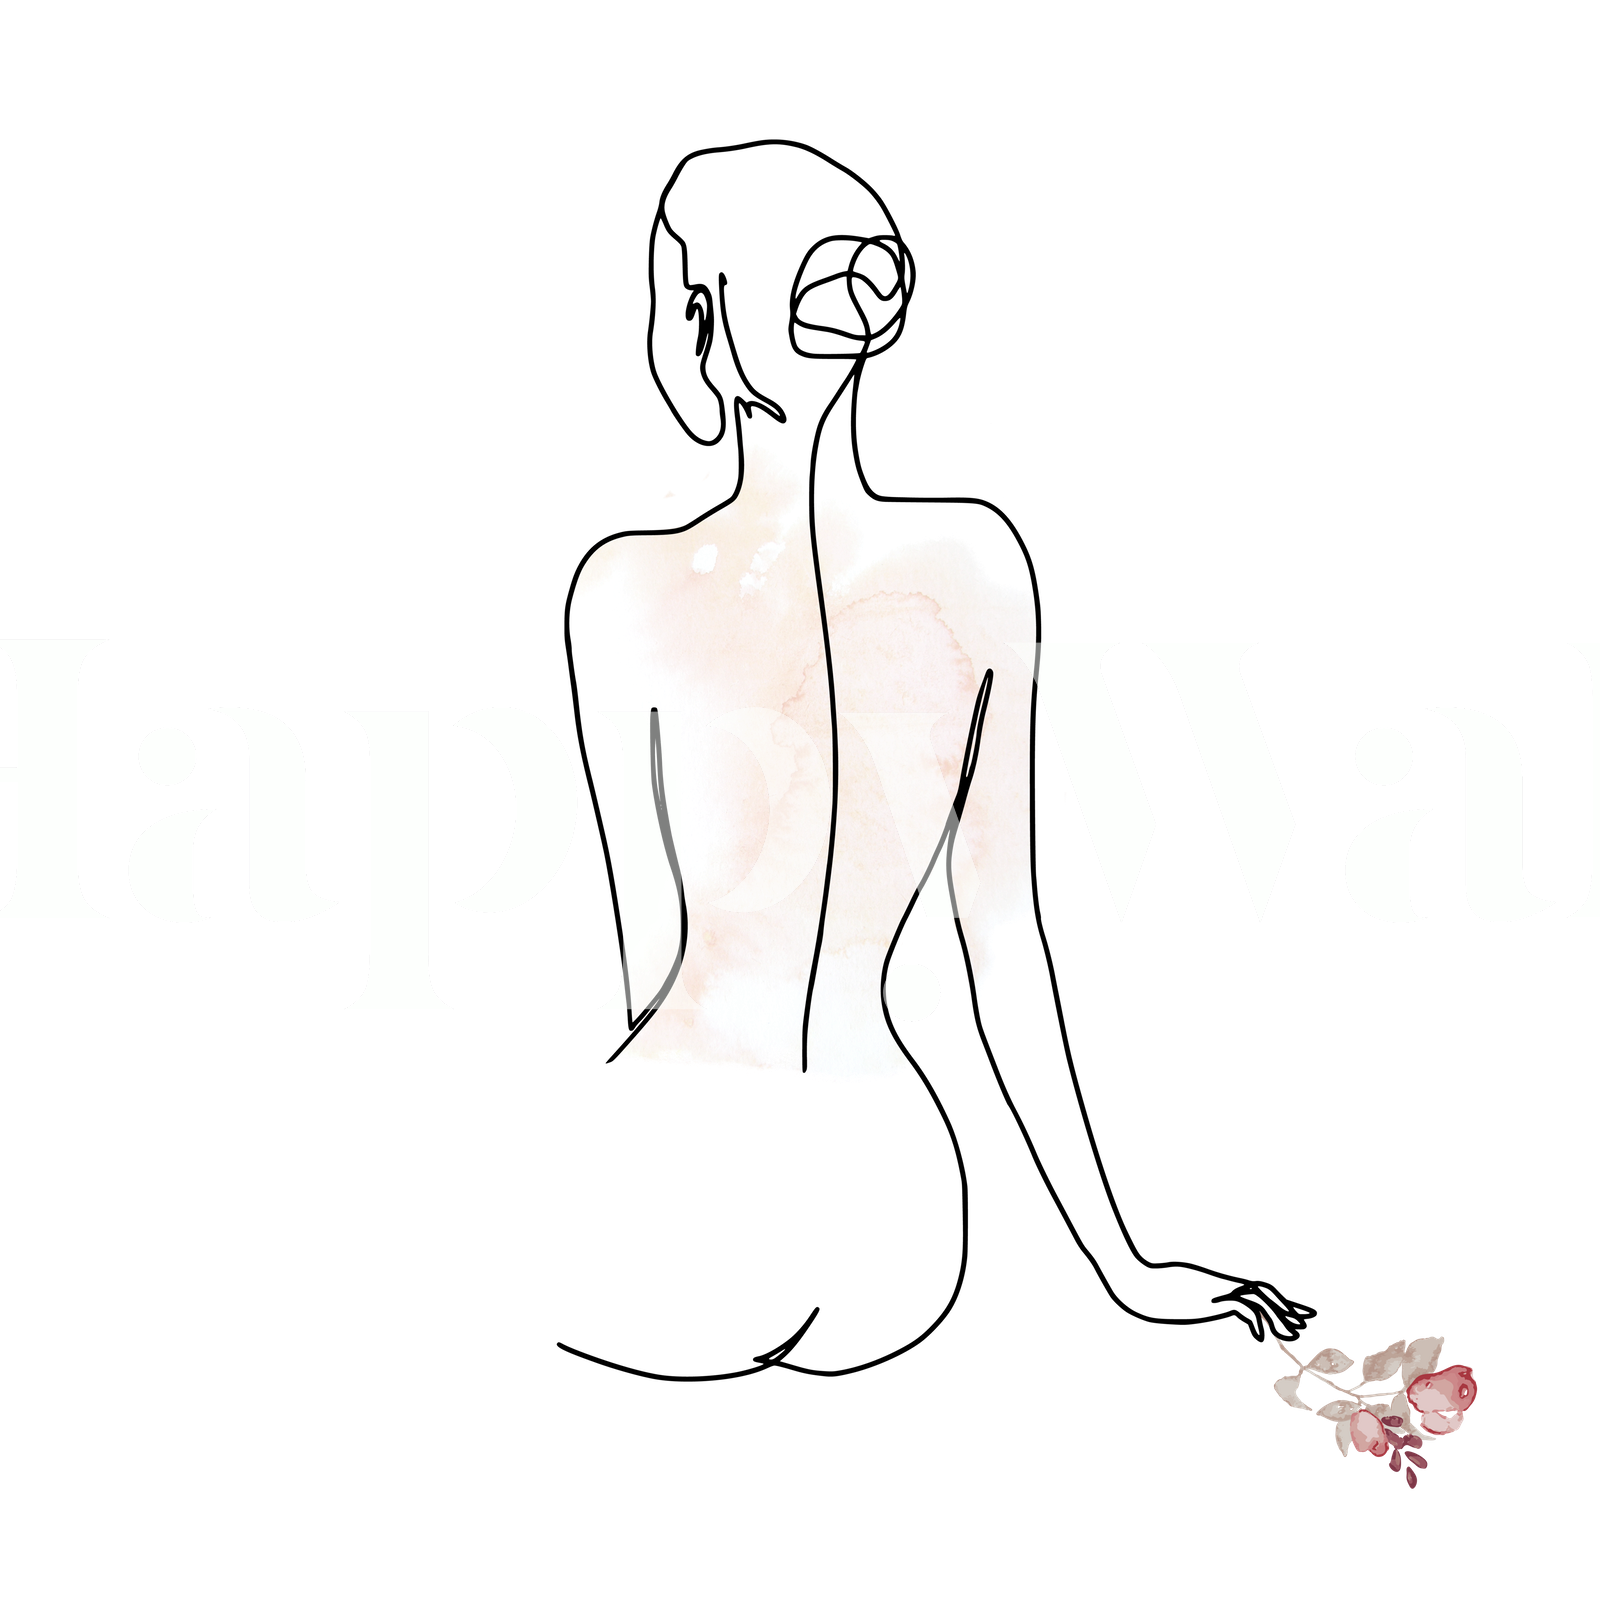 Buy Line Art of Naked Woman wallpaper US shipping at Happywall.com